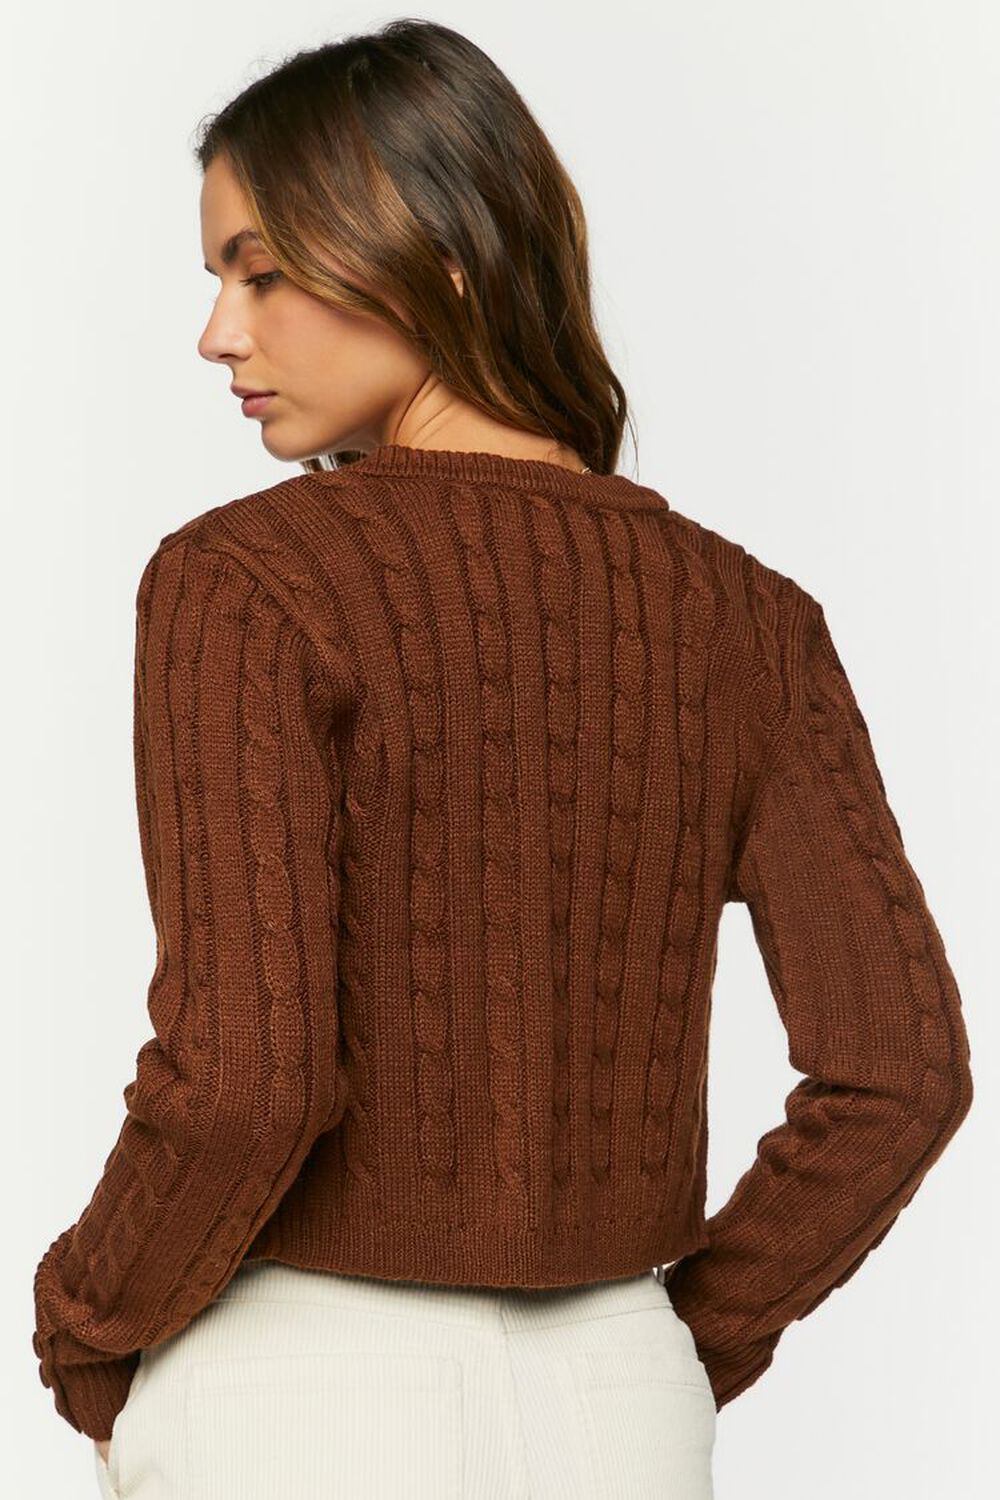 BROWN Cropped Cardigan Sweater, image 3